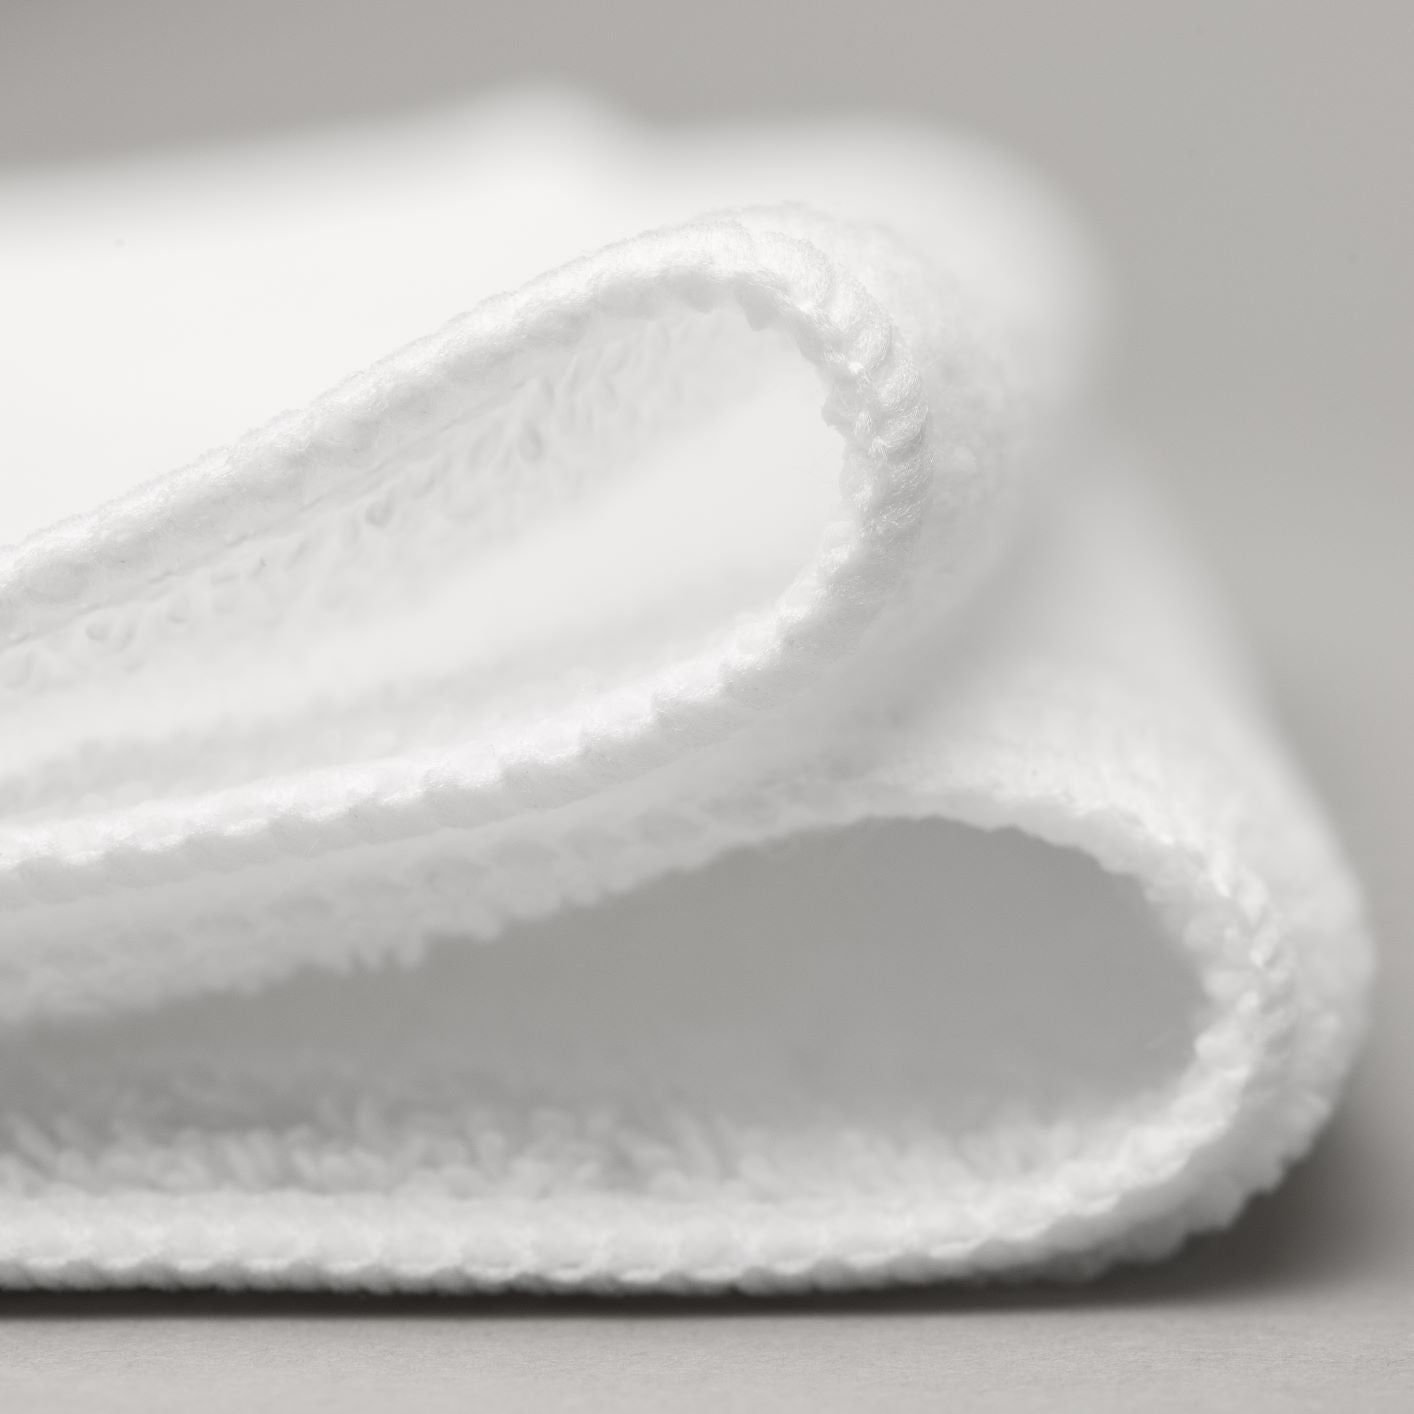 White folded towel